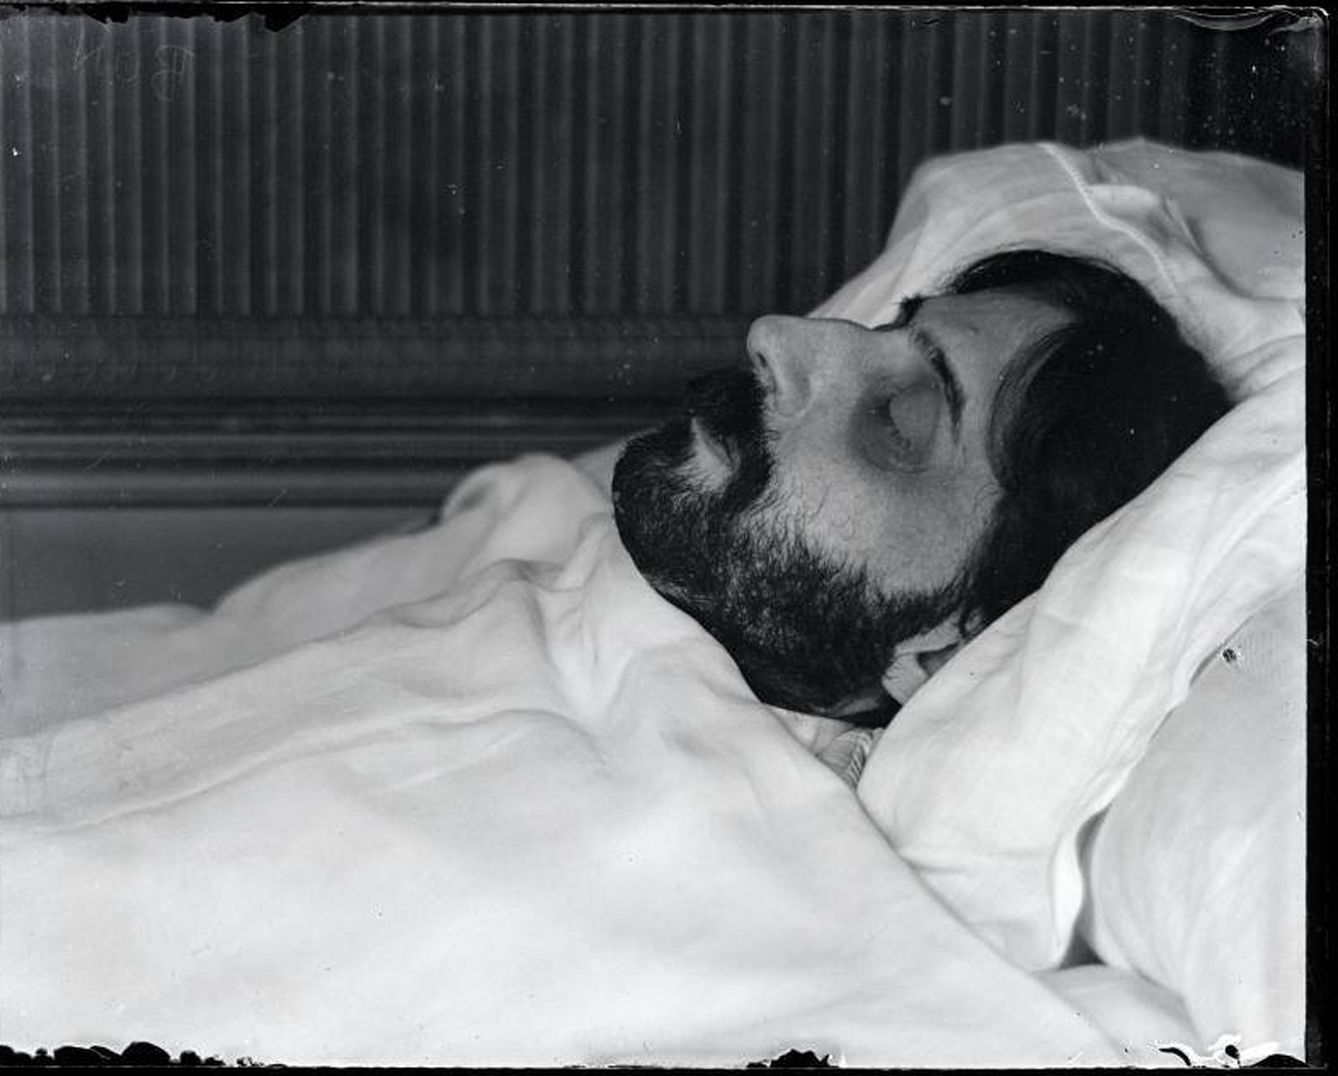 La famosa foto del cadáver de Proust hecha por Man Ray.